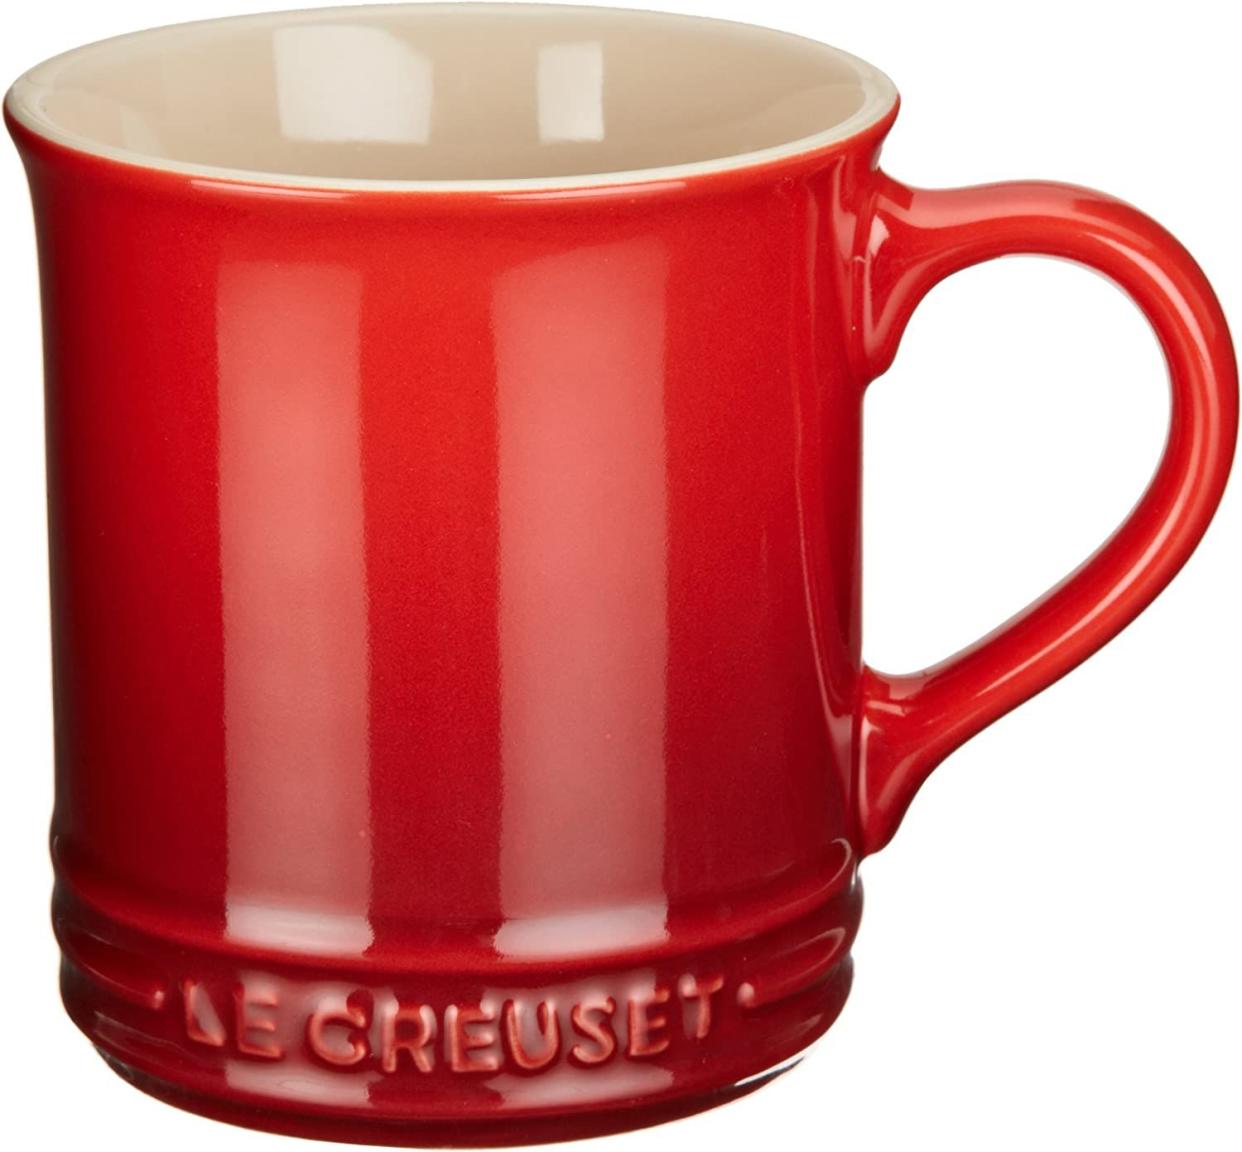 Le Creuset Mug in red